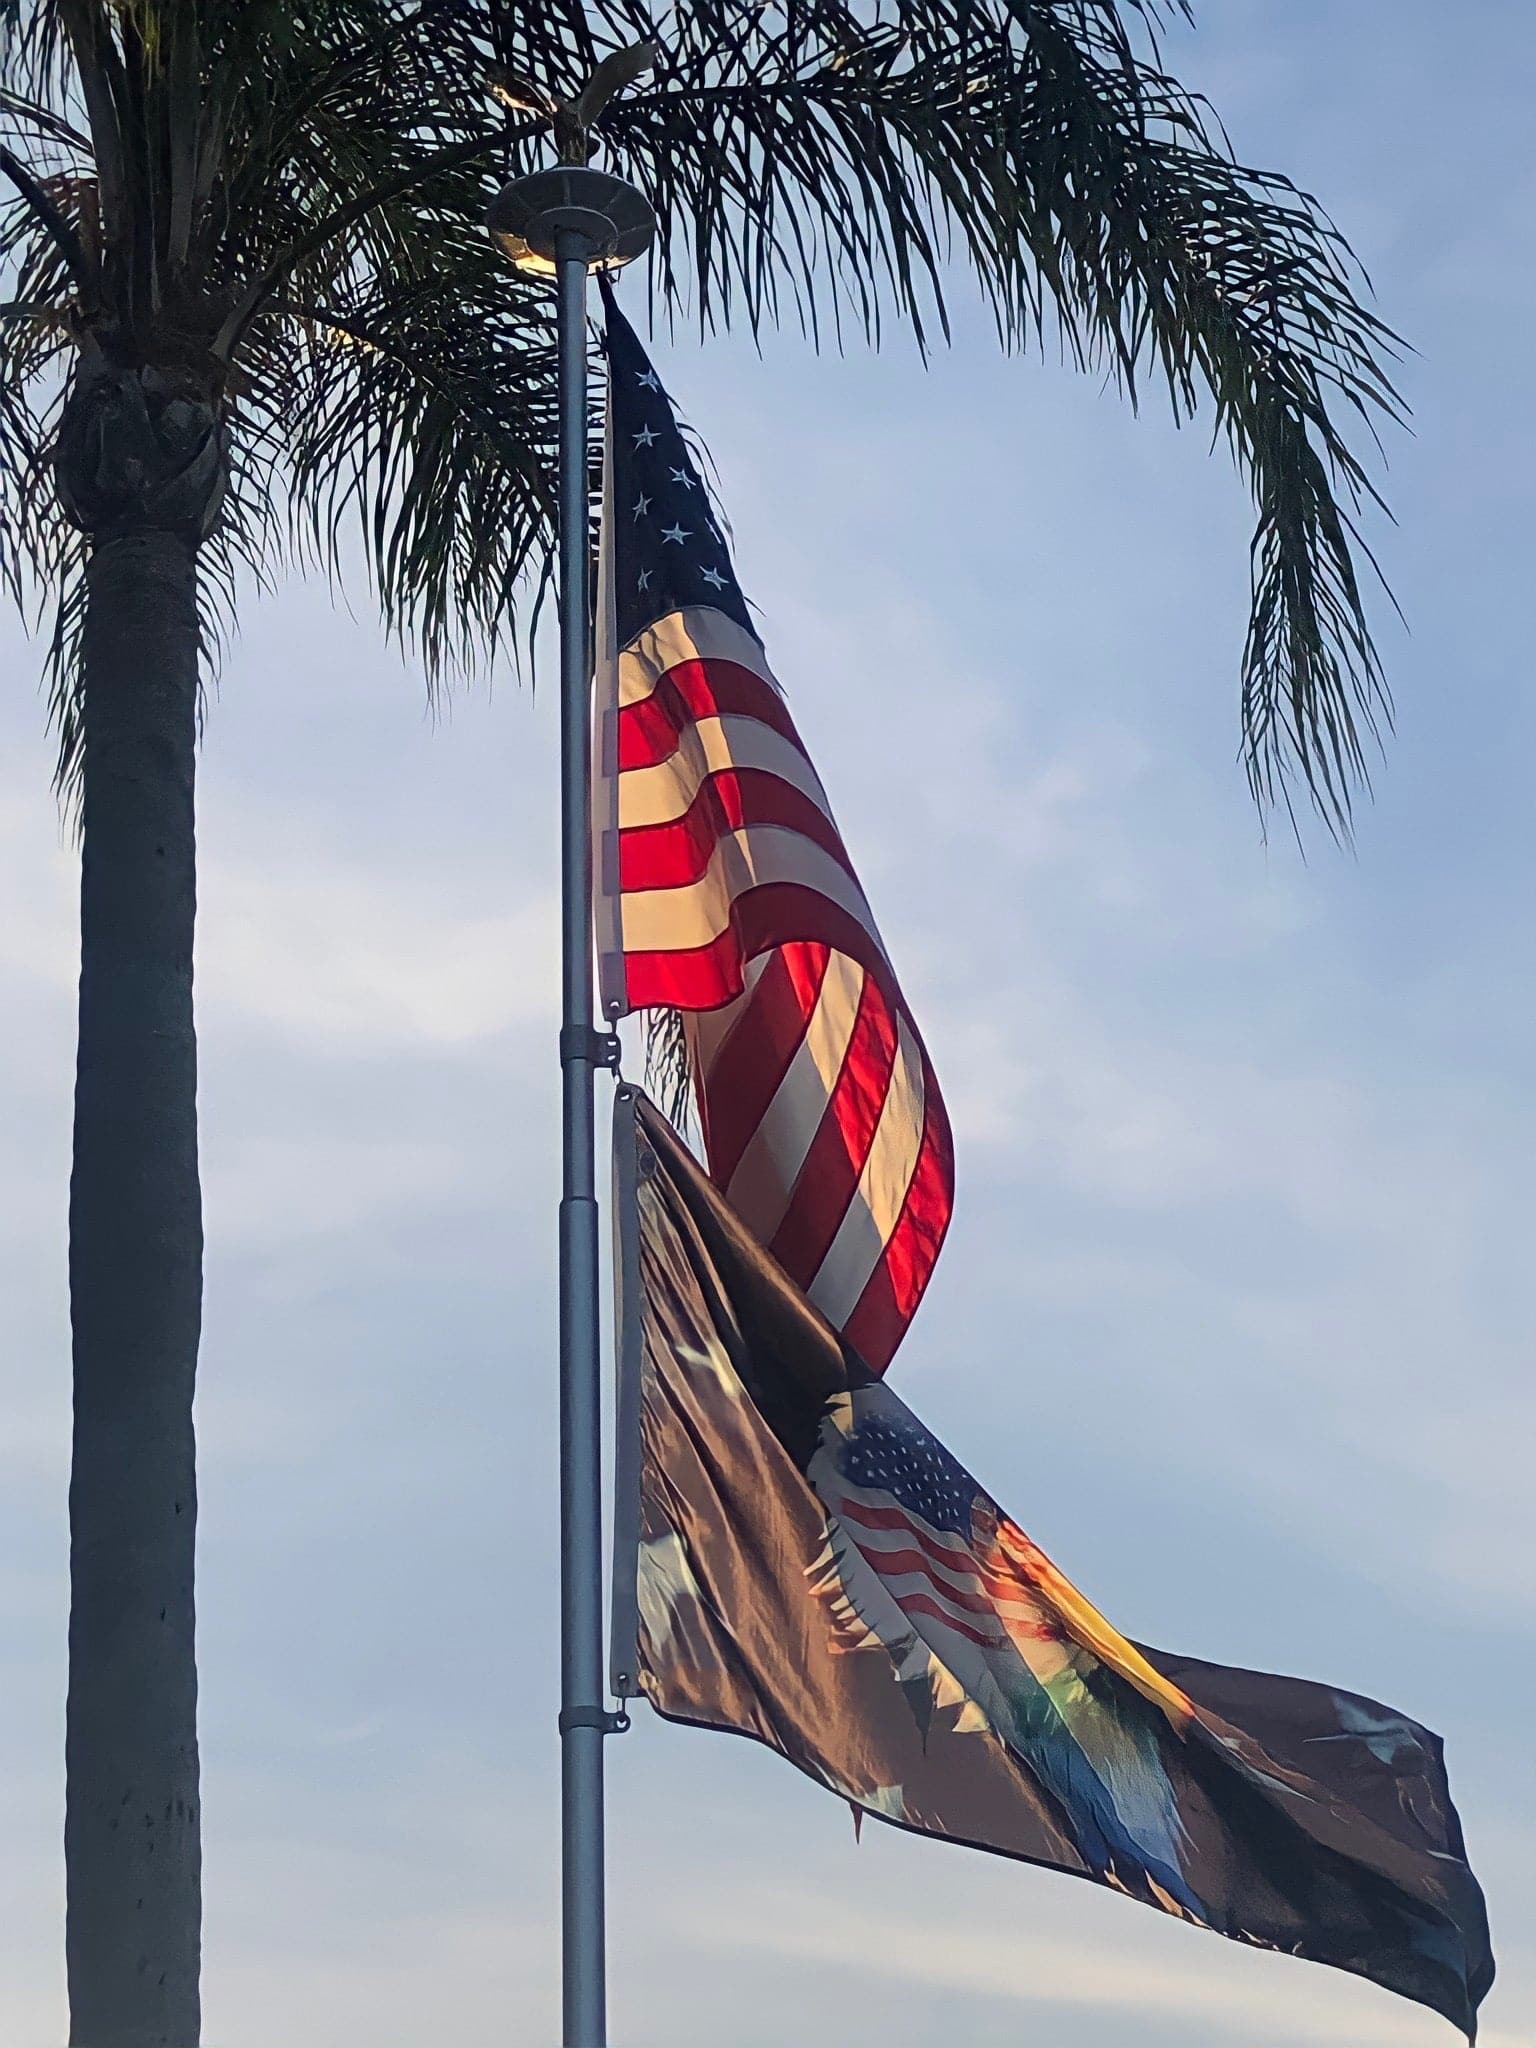 american flag palm tree